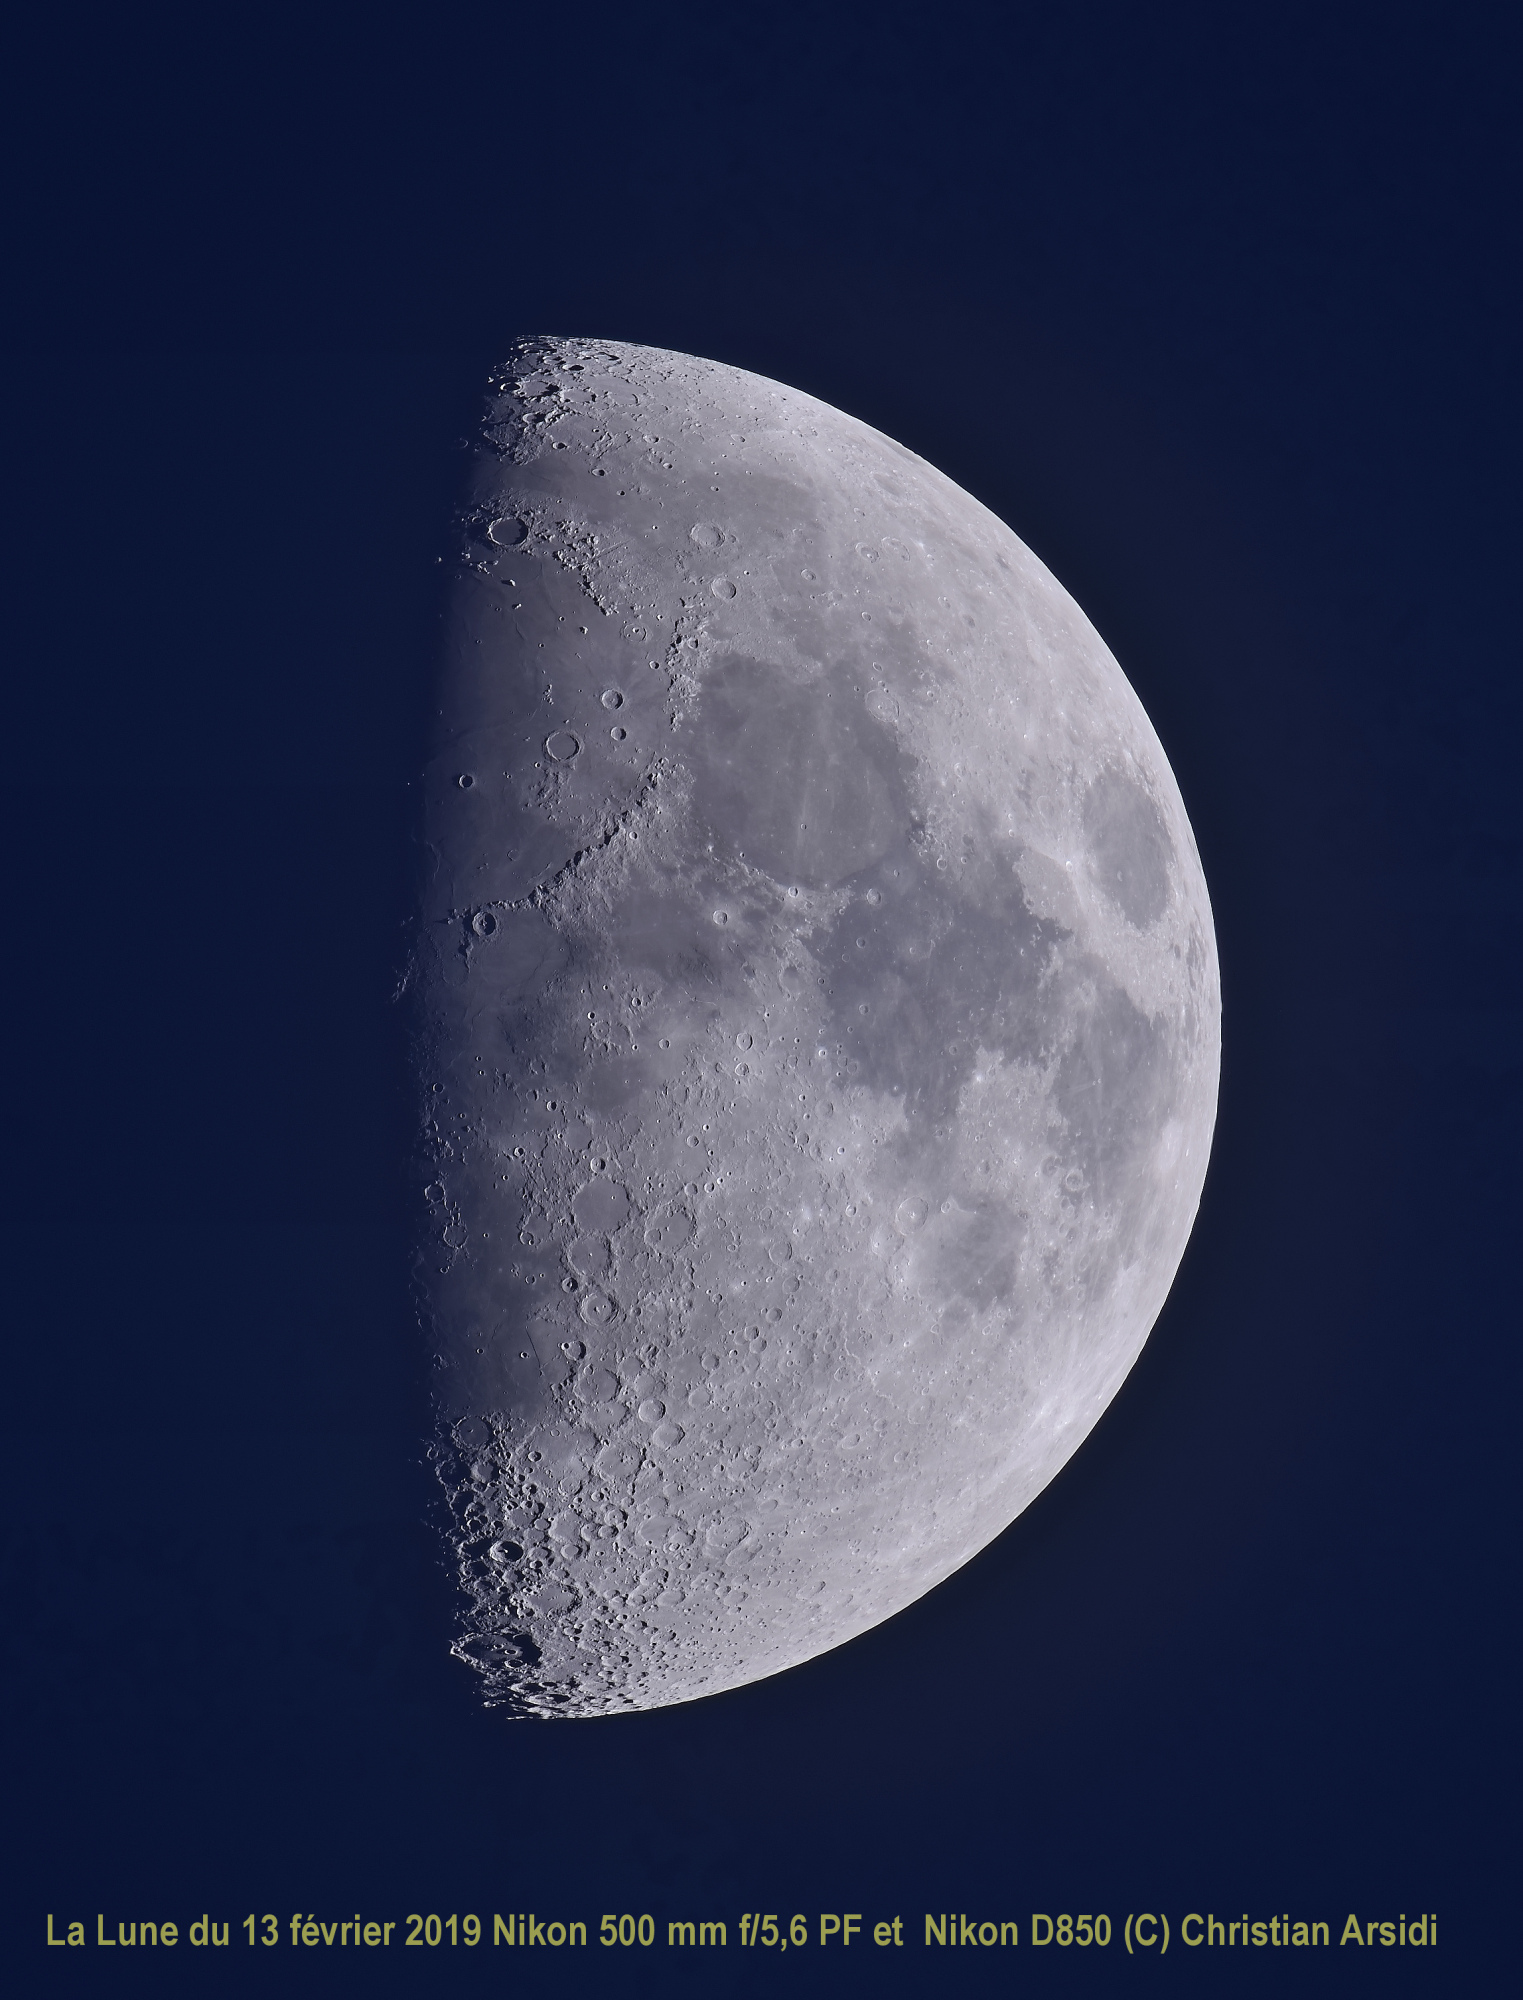 La Lune 35 images vancittert 3 recadrée_DxO-2 1 TTB JPEG.jpg